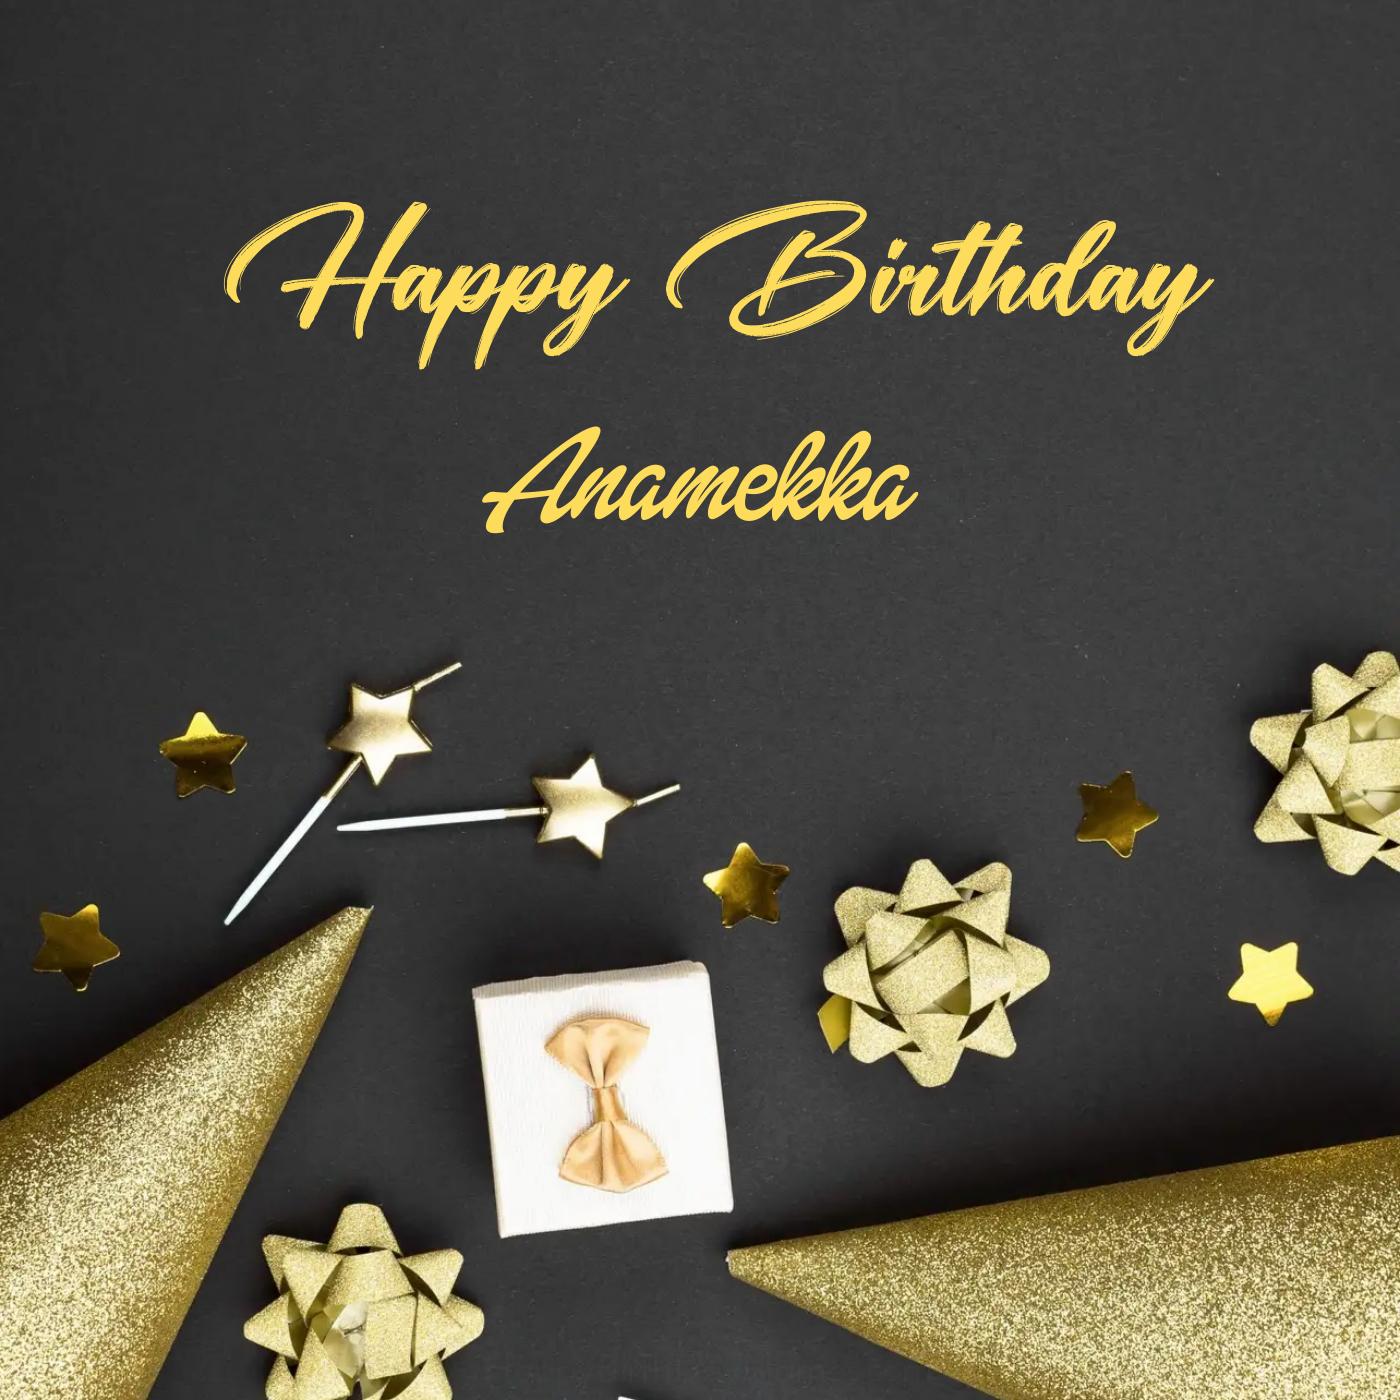 Happy Birthday Anamekka Golden Theme Card